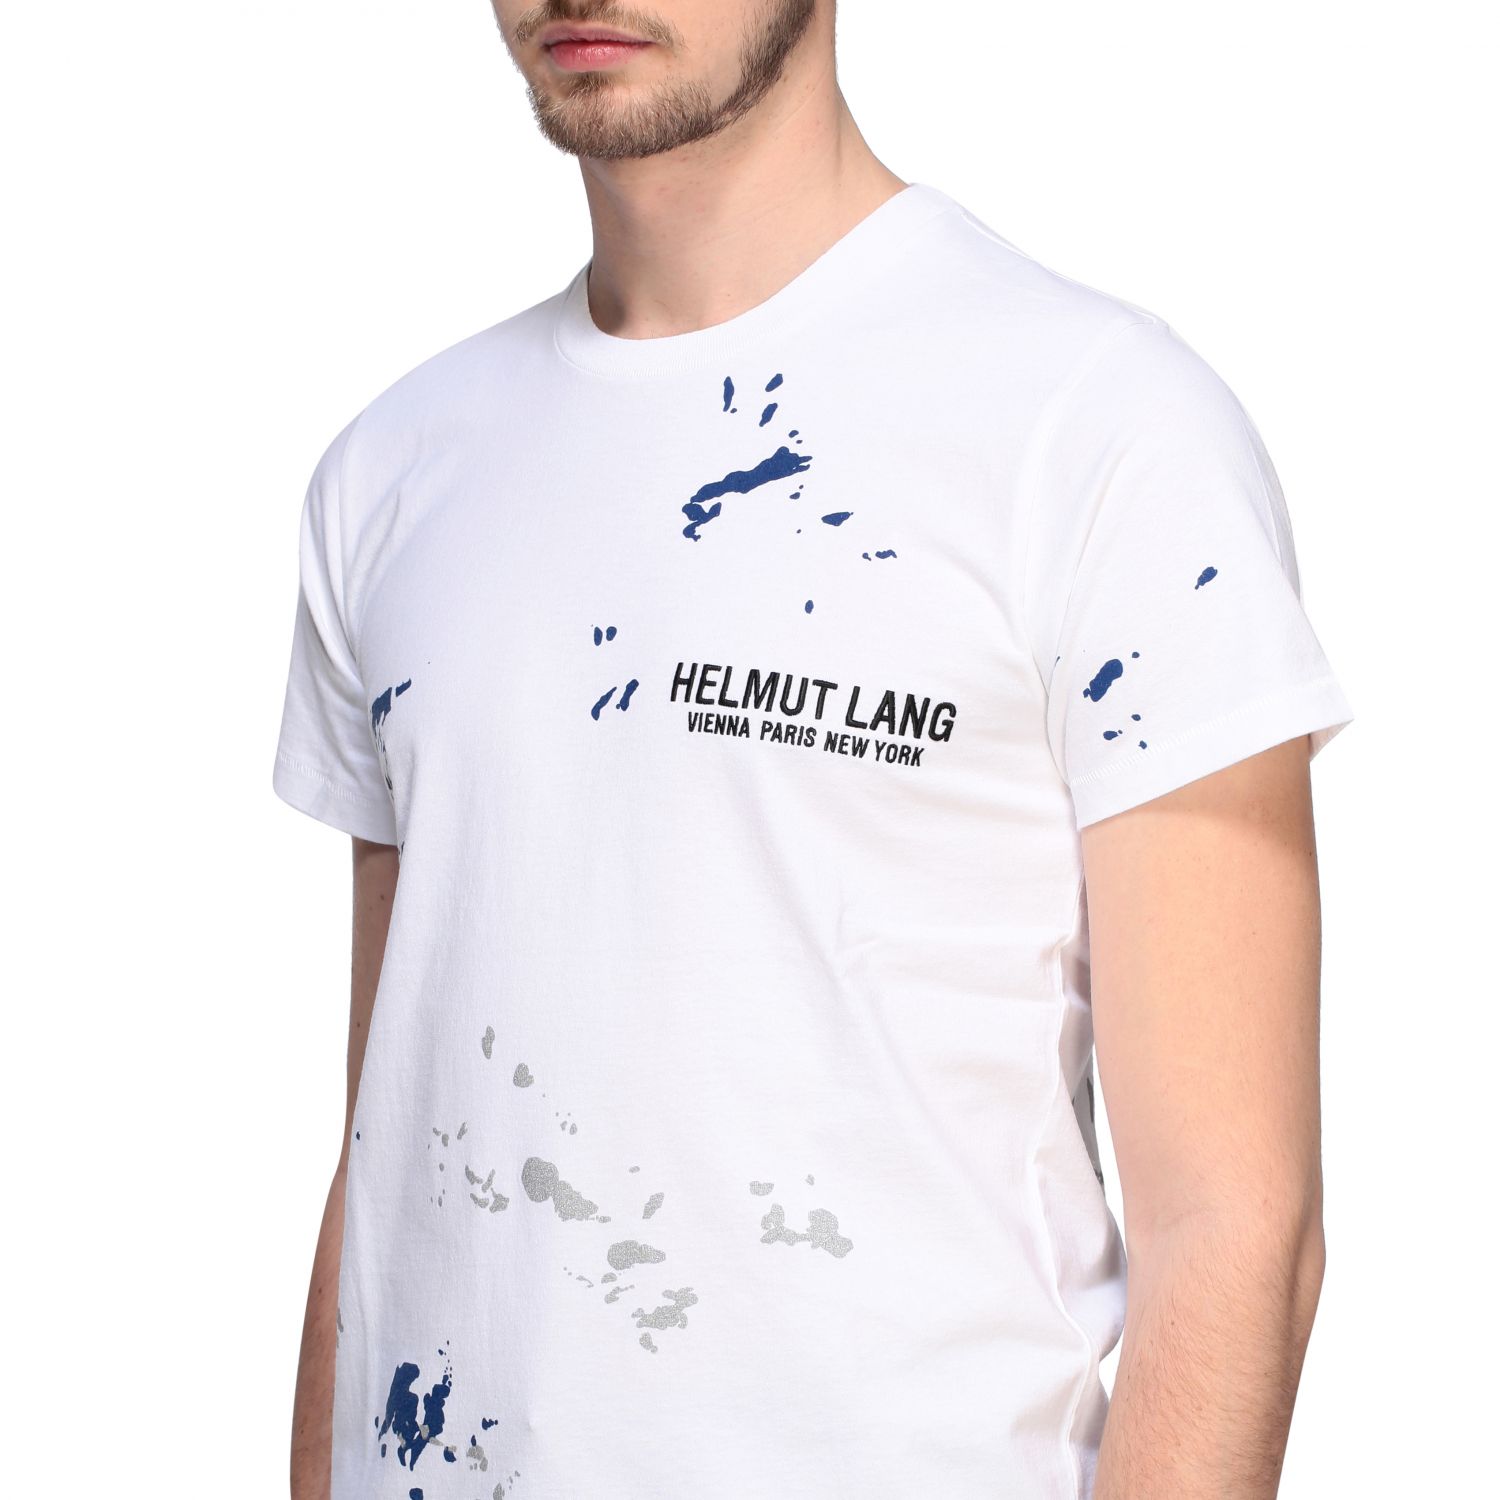 Helmut Lang Outlet: T-shirt men | T-Shirt Helmut Lang Men White | T ...